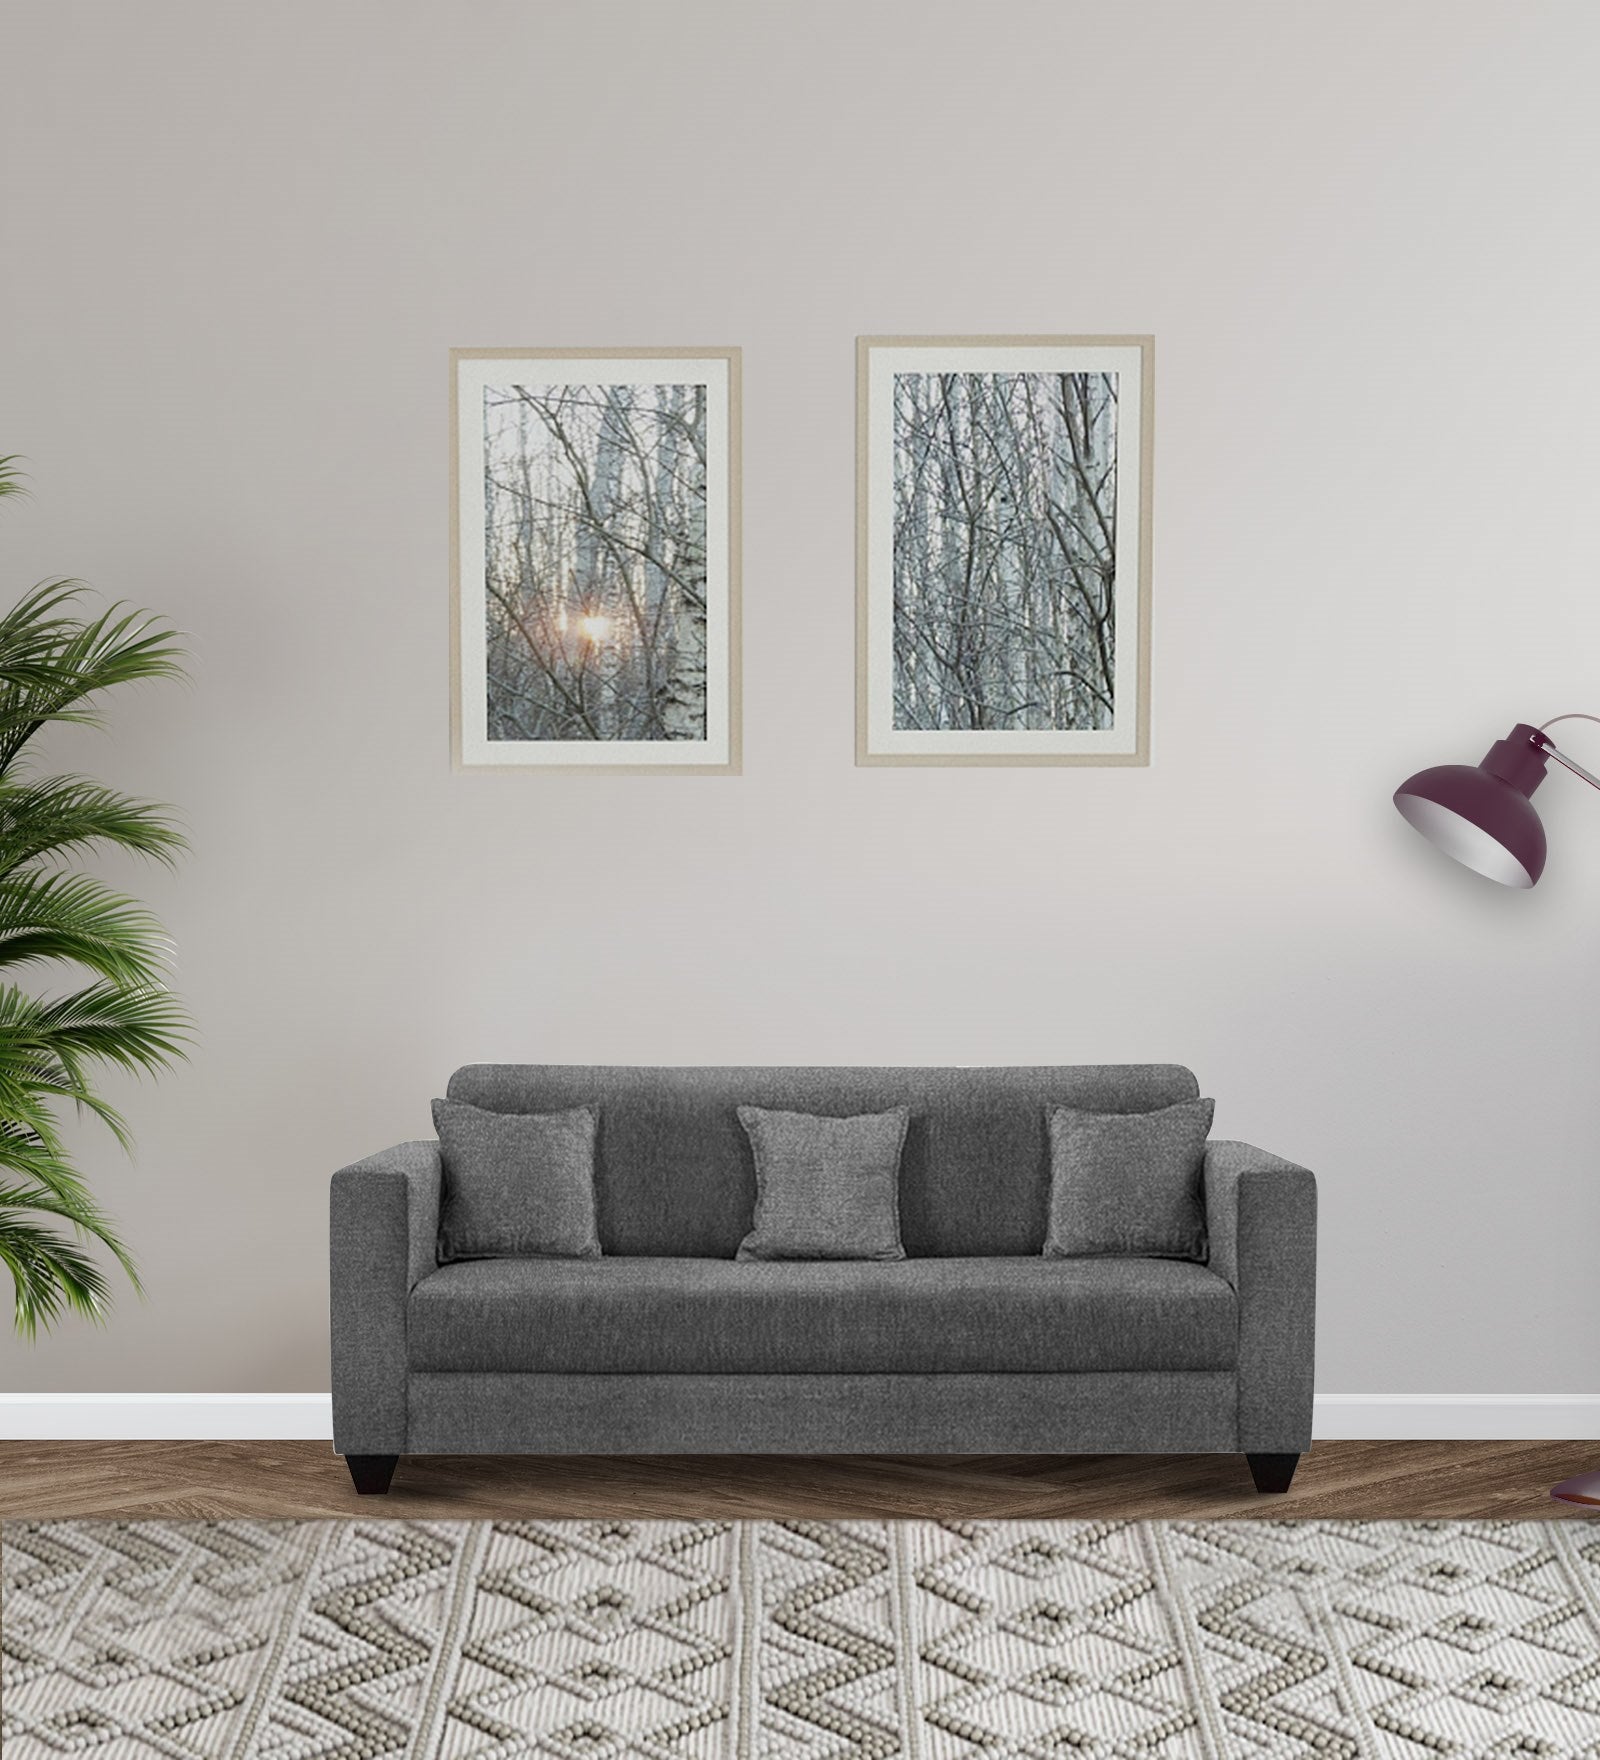 Nebula Fabric 3 Seater Sofa in Charcoal Grey Colour